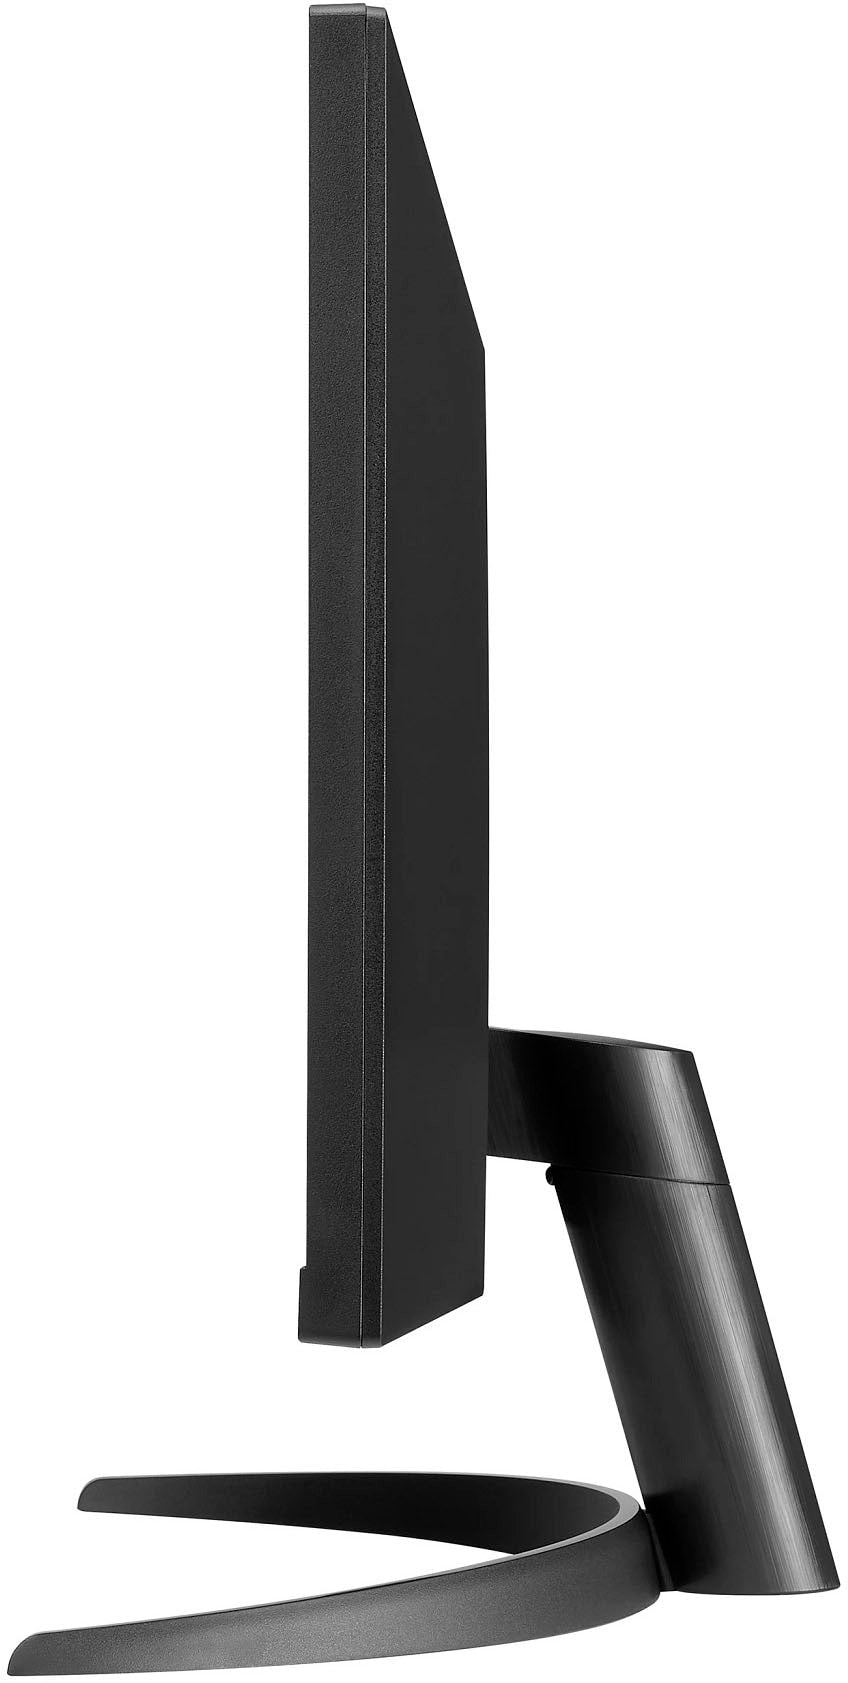 LG - 29” IPS LED UltraWide FHD AMD FreeSync Monitor with HDR (HDMI, DisplayPort) - Black_1